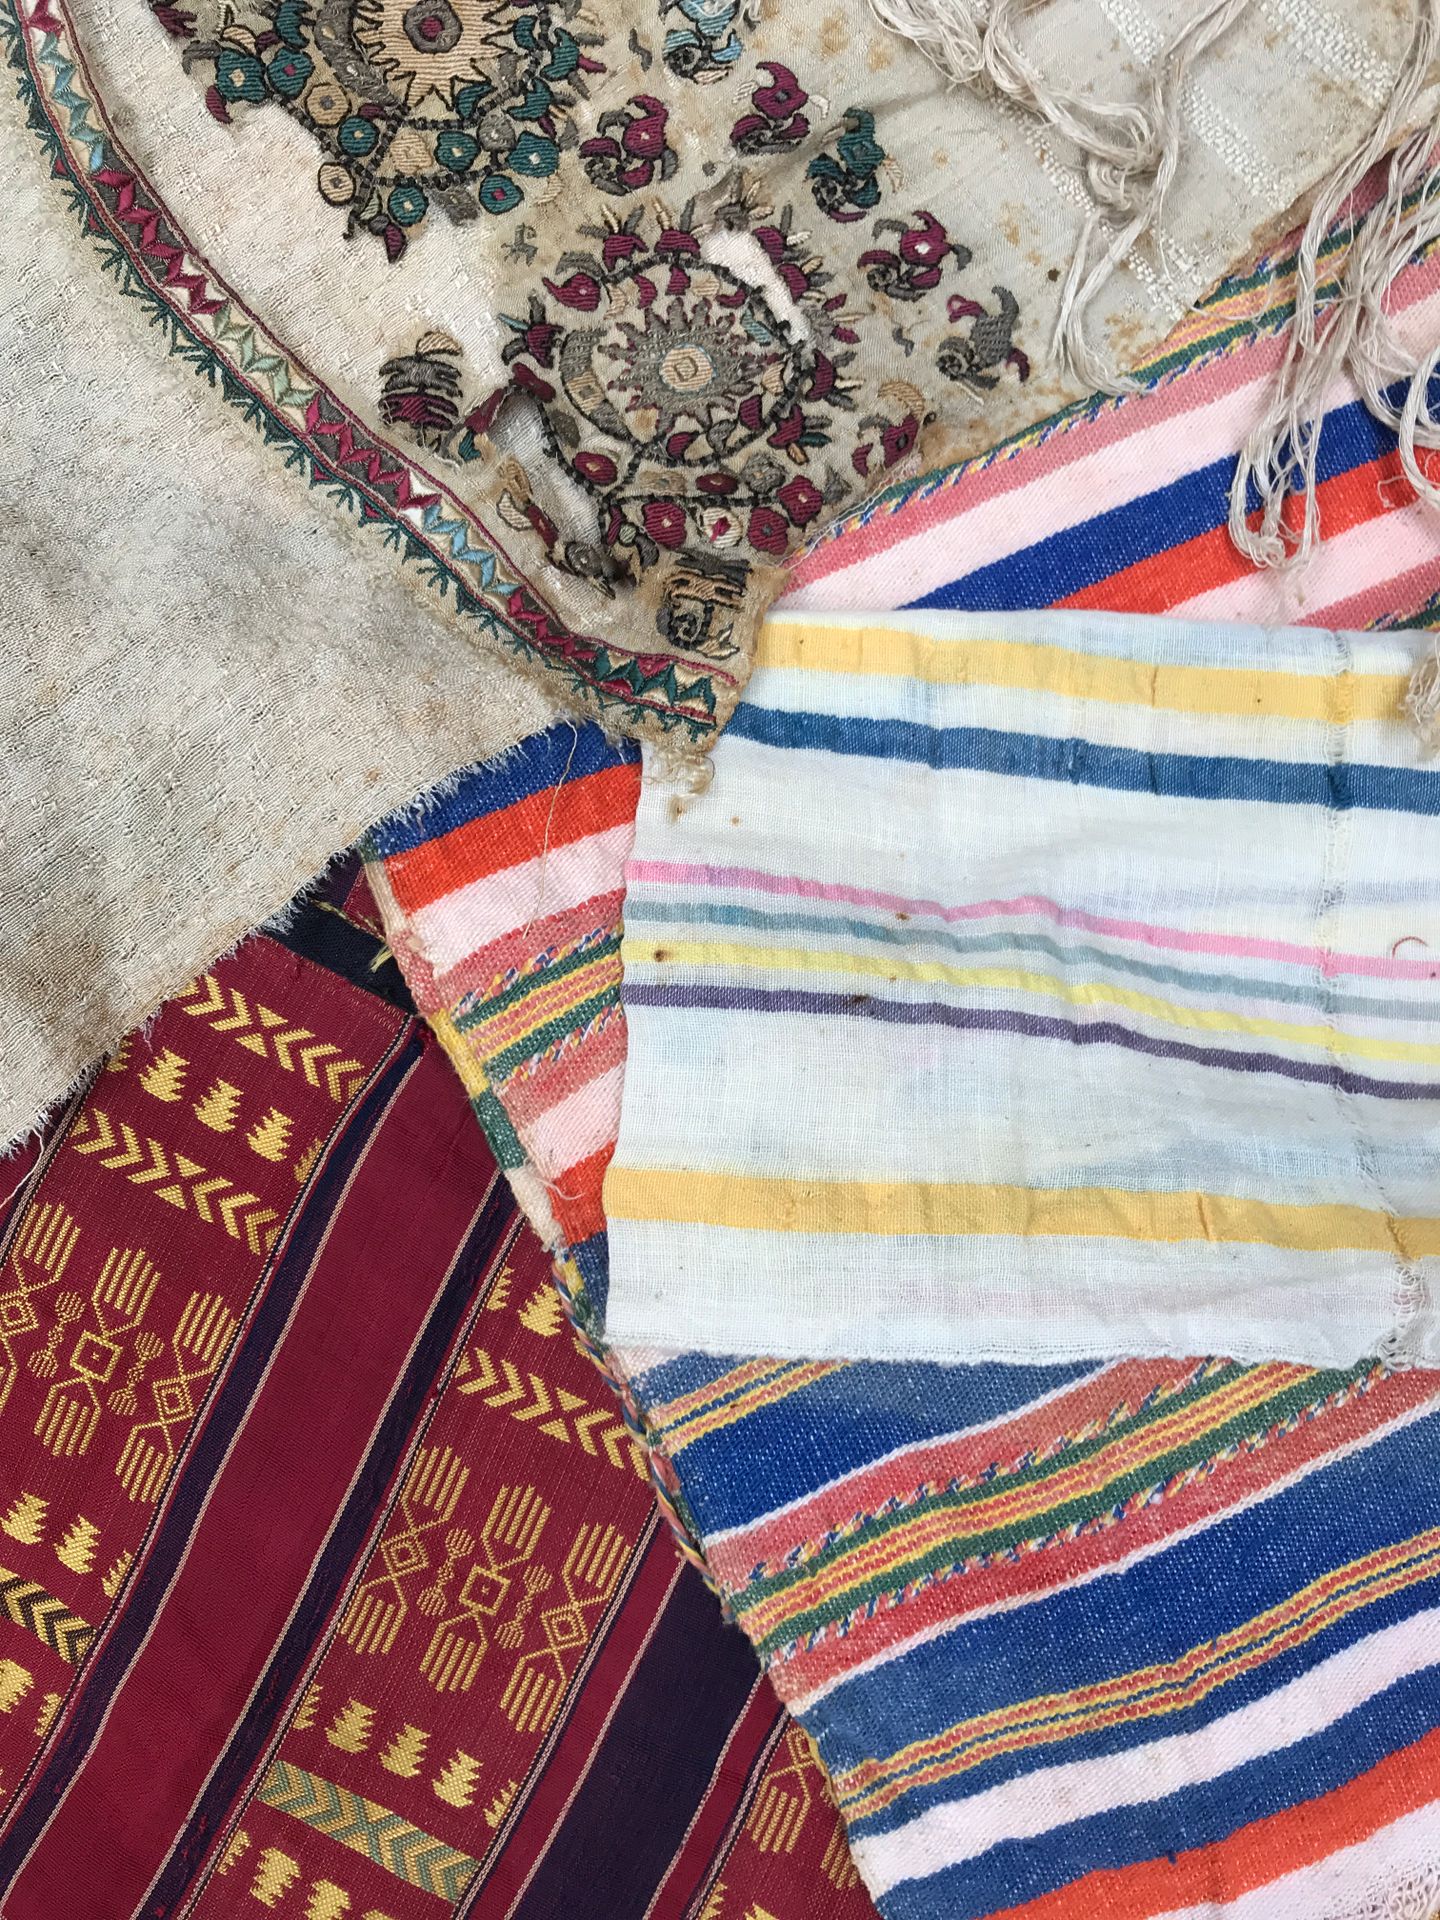 Fragments de textiles orientaux 包括7件不同种类和颜色的作品

我们附赠各种流苏和绳索